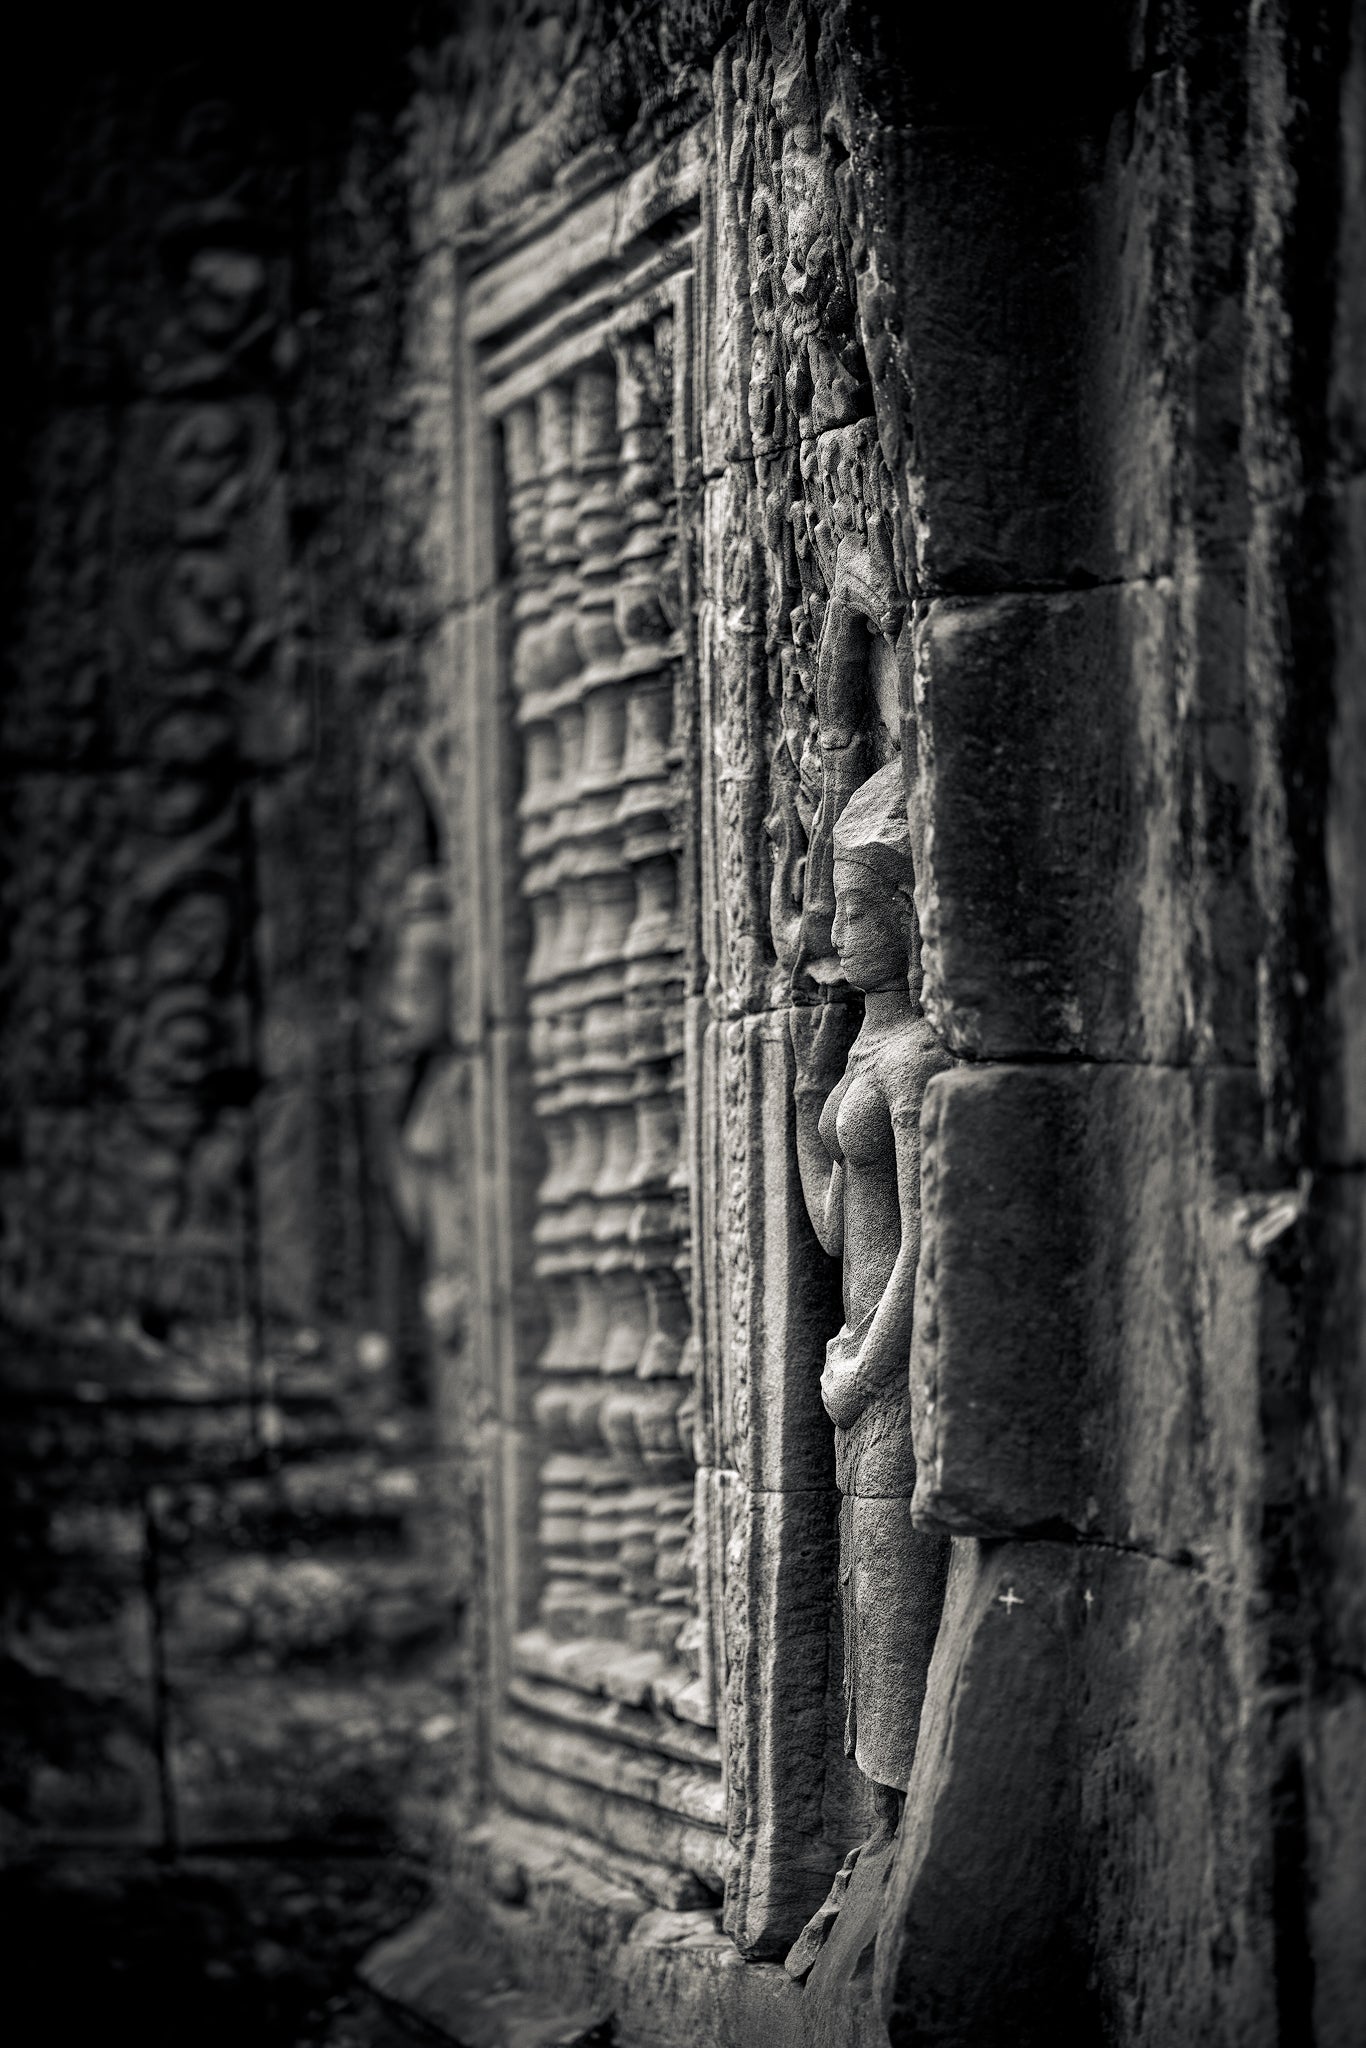 Apsaras (Devatas), Banteay Kdei Temple, Angkor, Cambodia